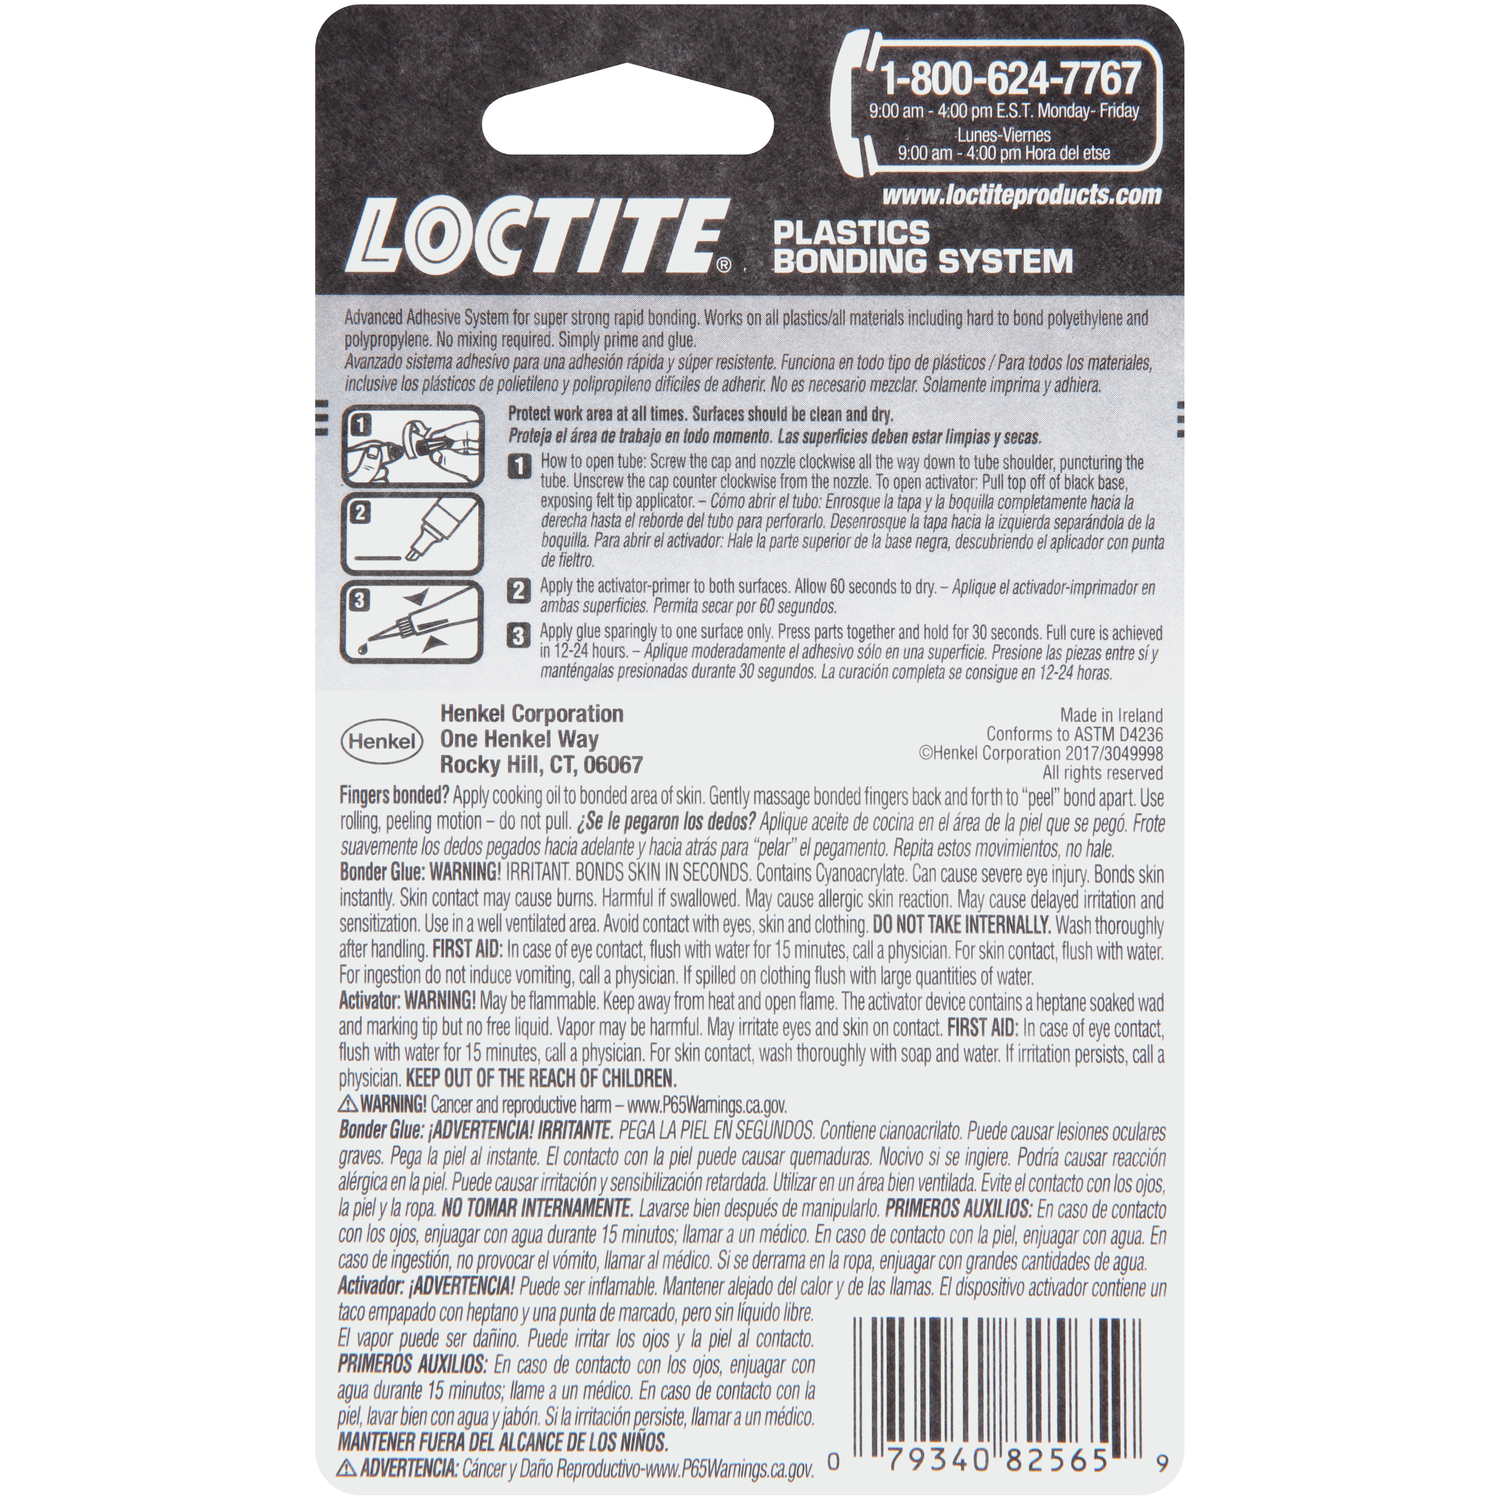 Loctite Plastic Bonding System High Strength Cyanoacrylate Plastic Bonder 4 gm